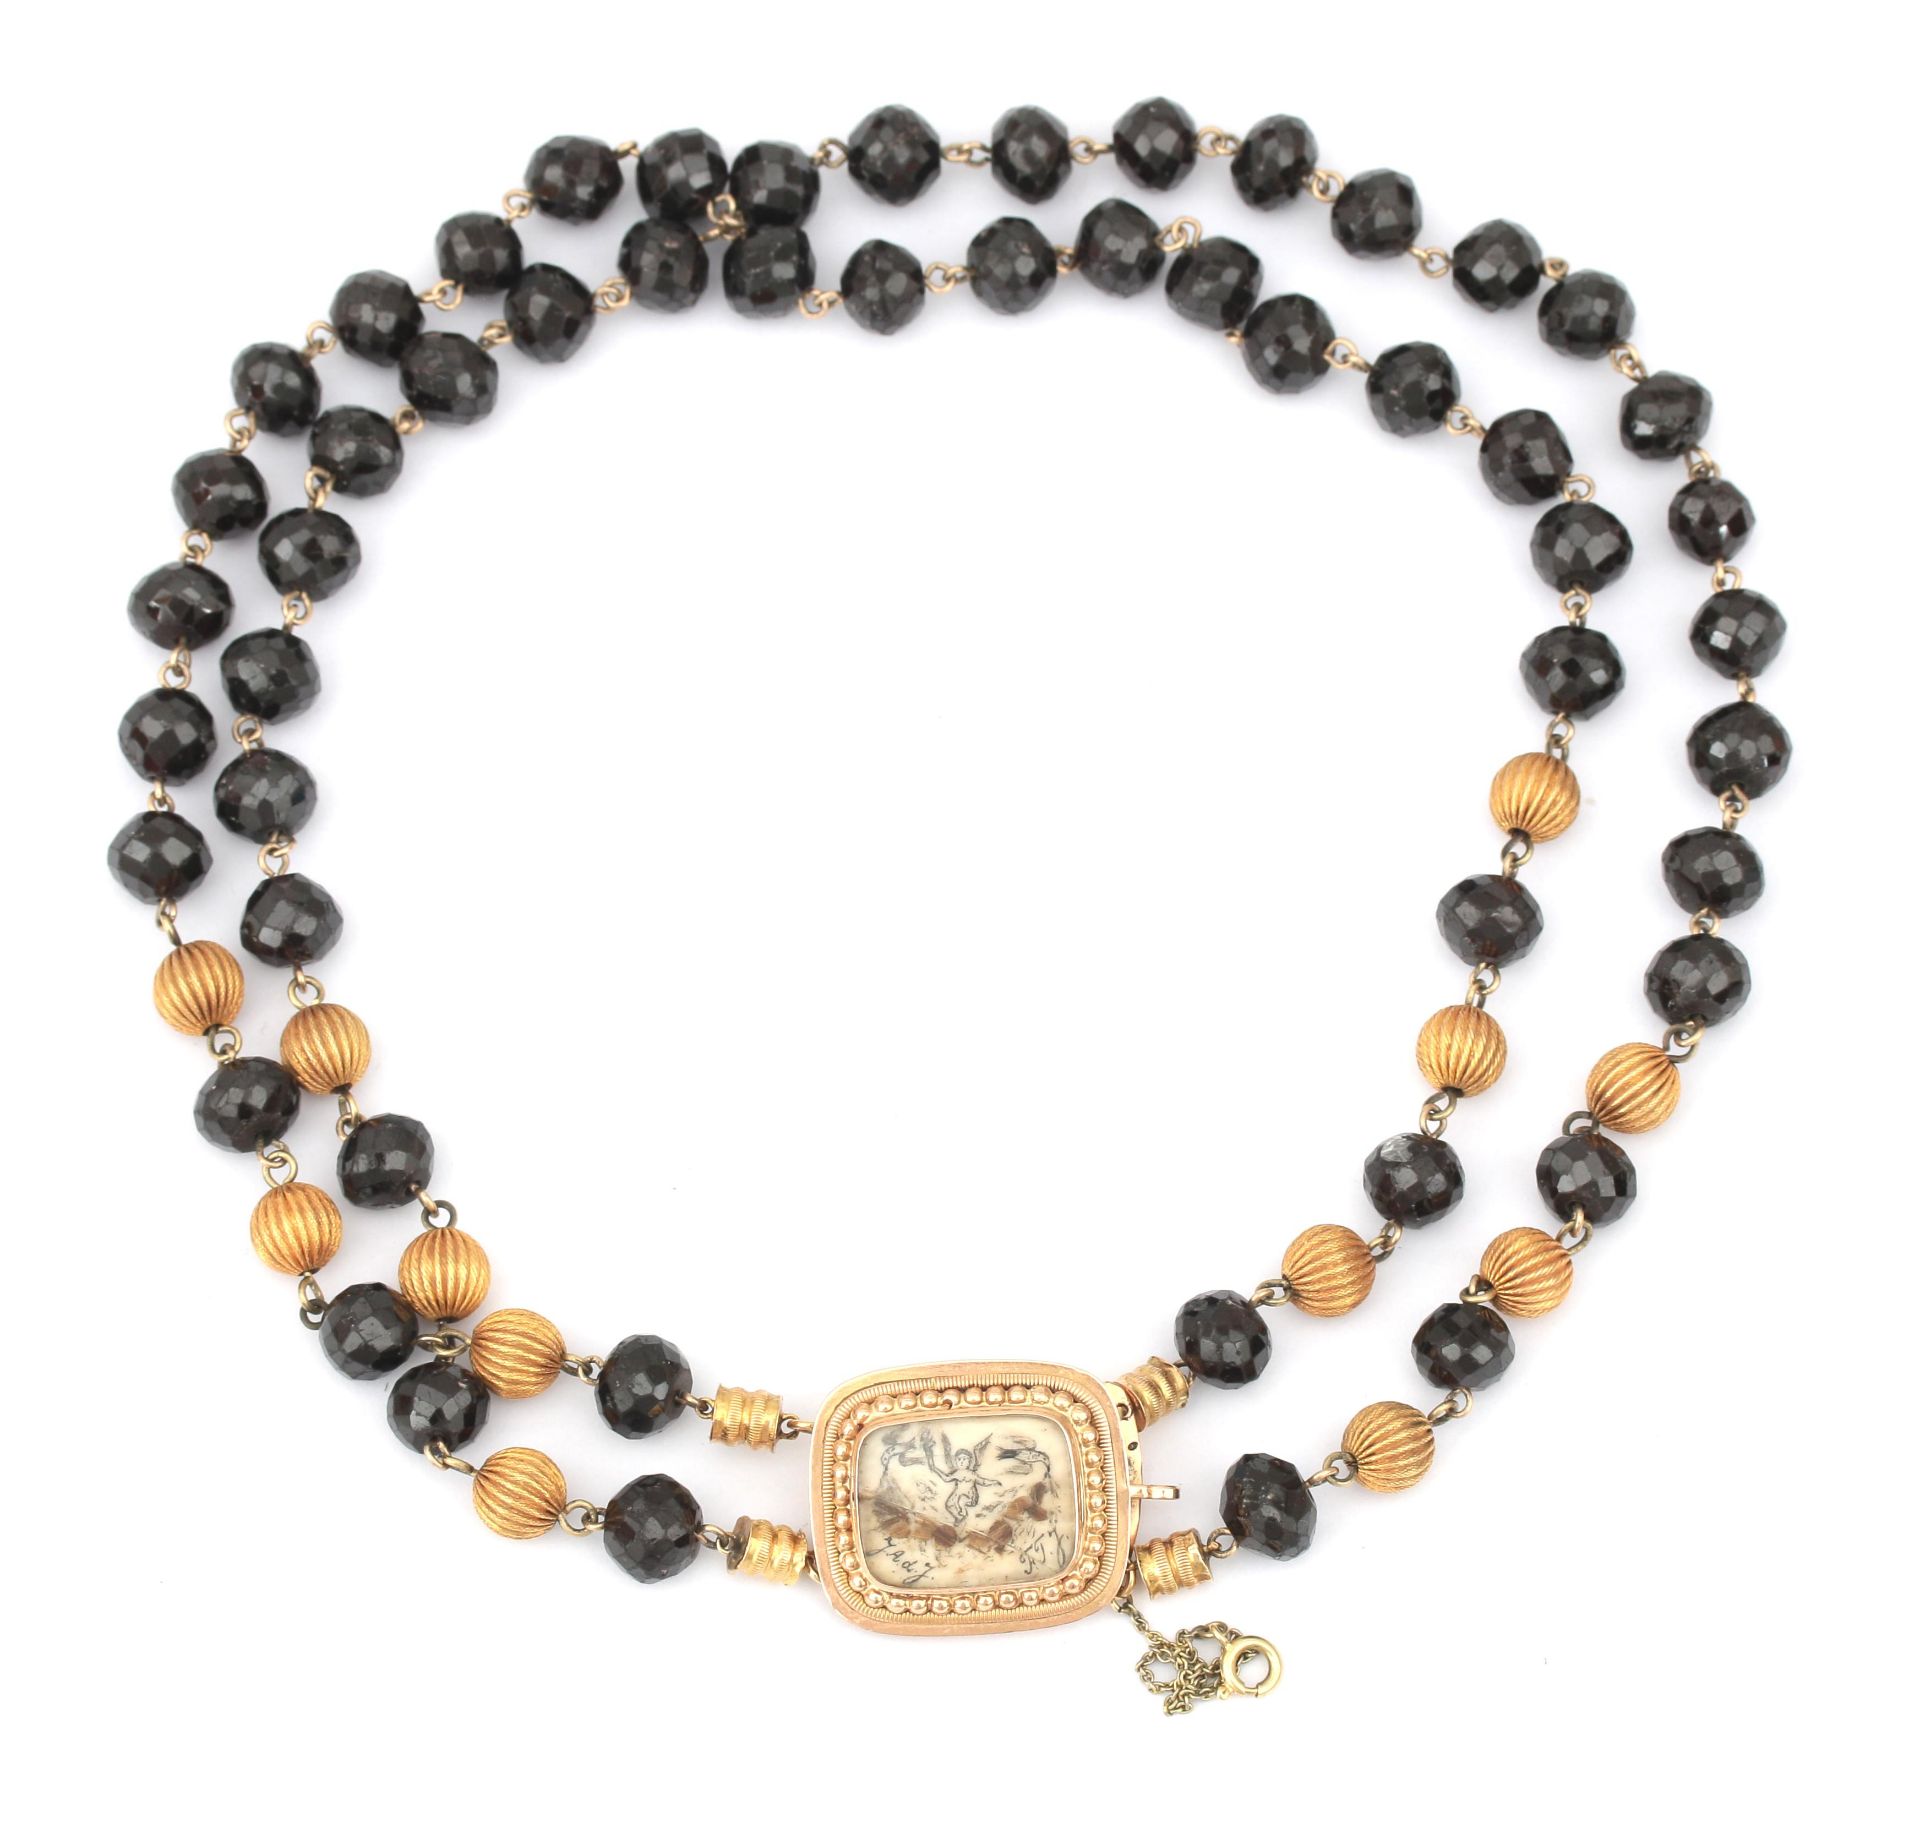 A garnet necklace with a 14 karat gold clasp